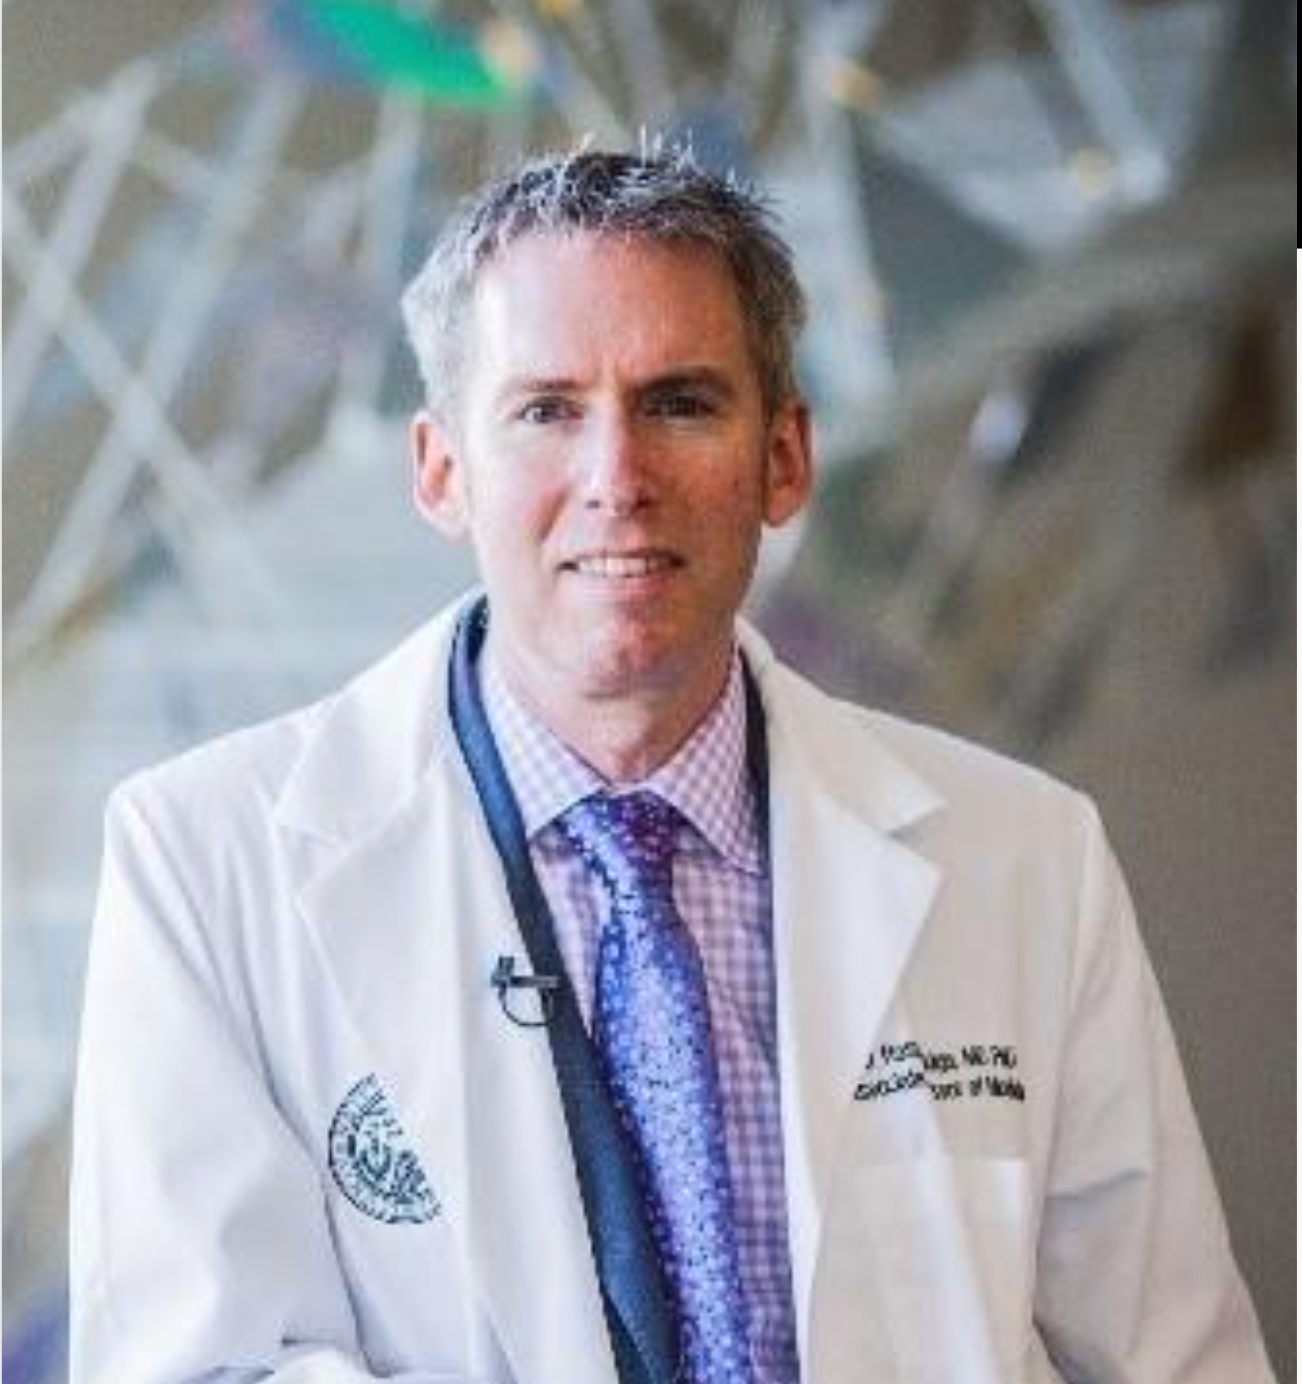 D. Ross Camidge, MD, PhD

University of Colorado Hospital

Aurora, CO